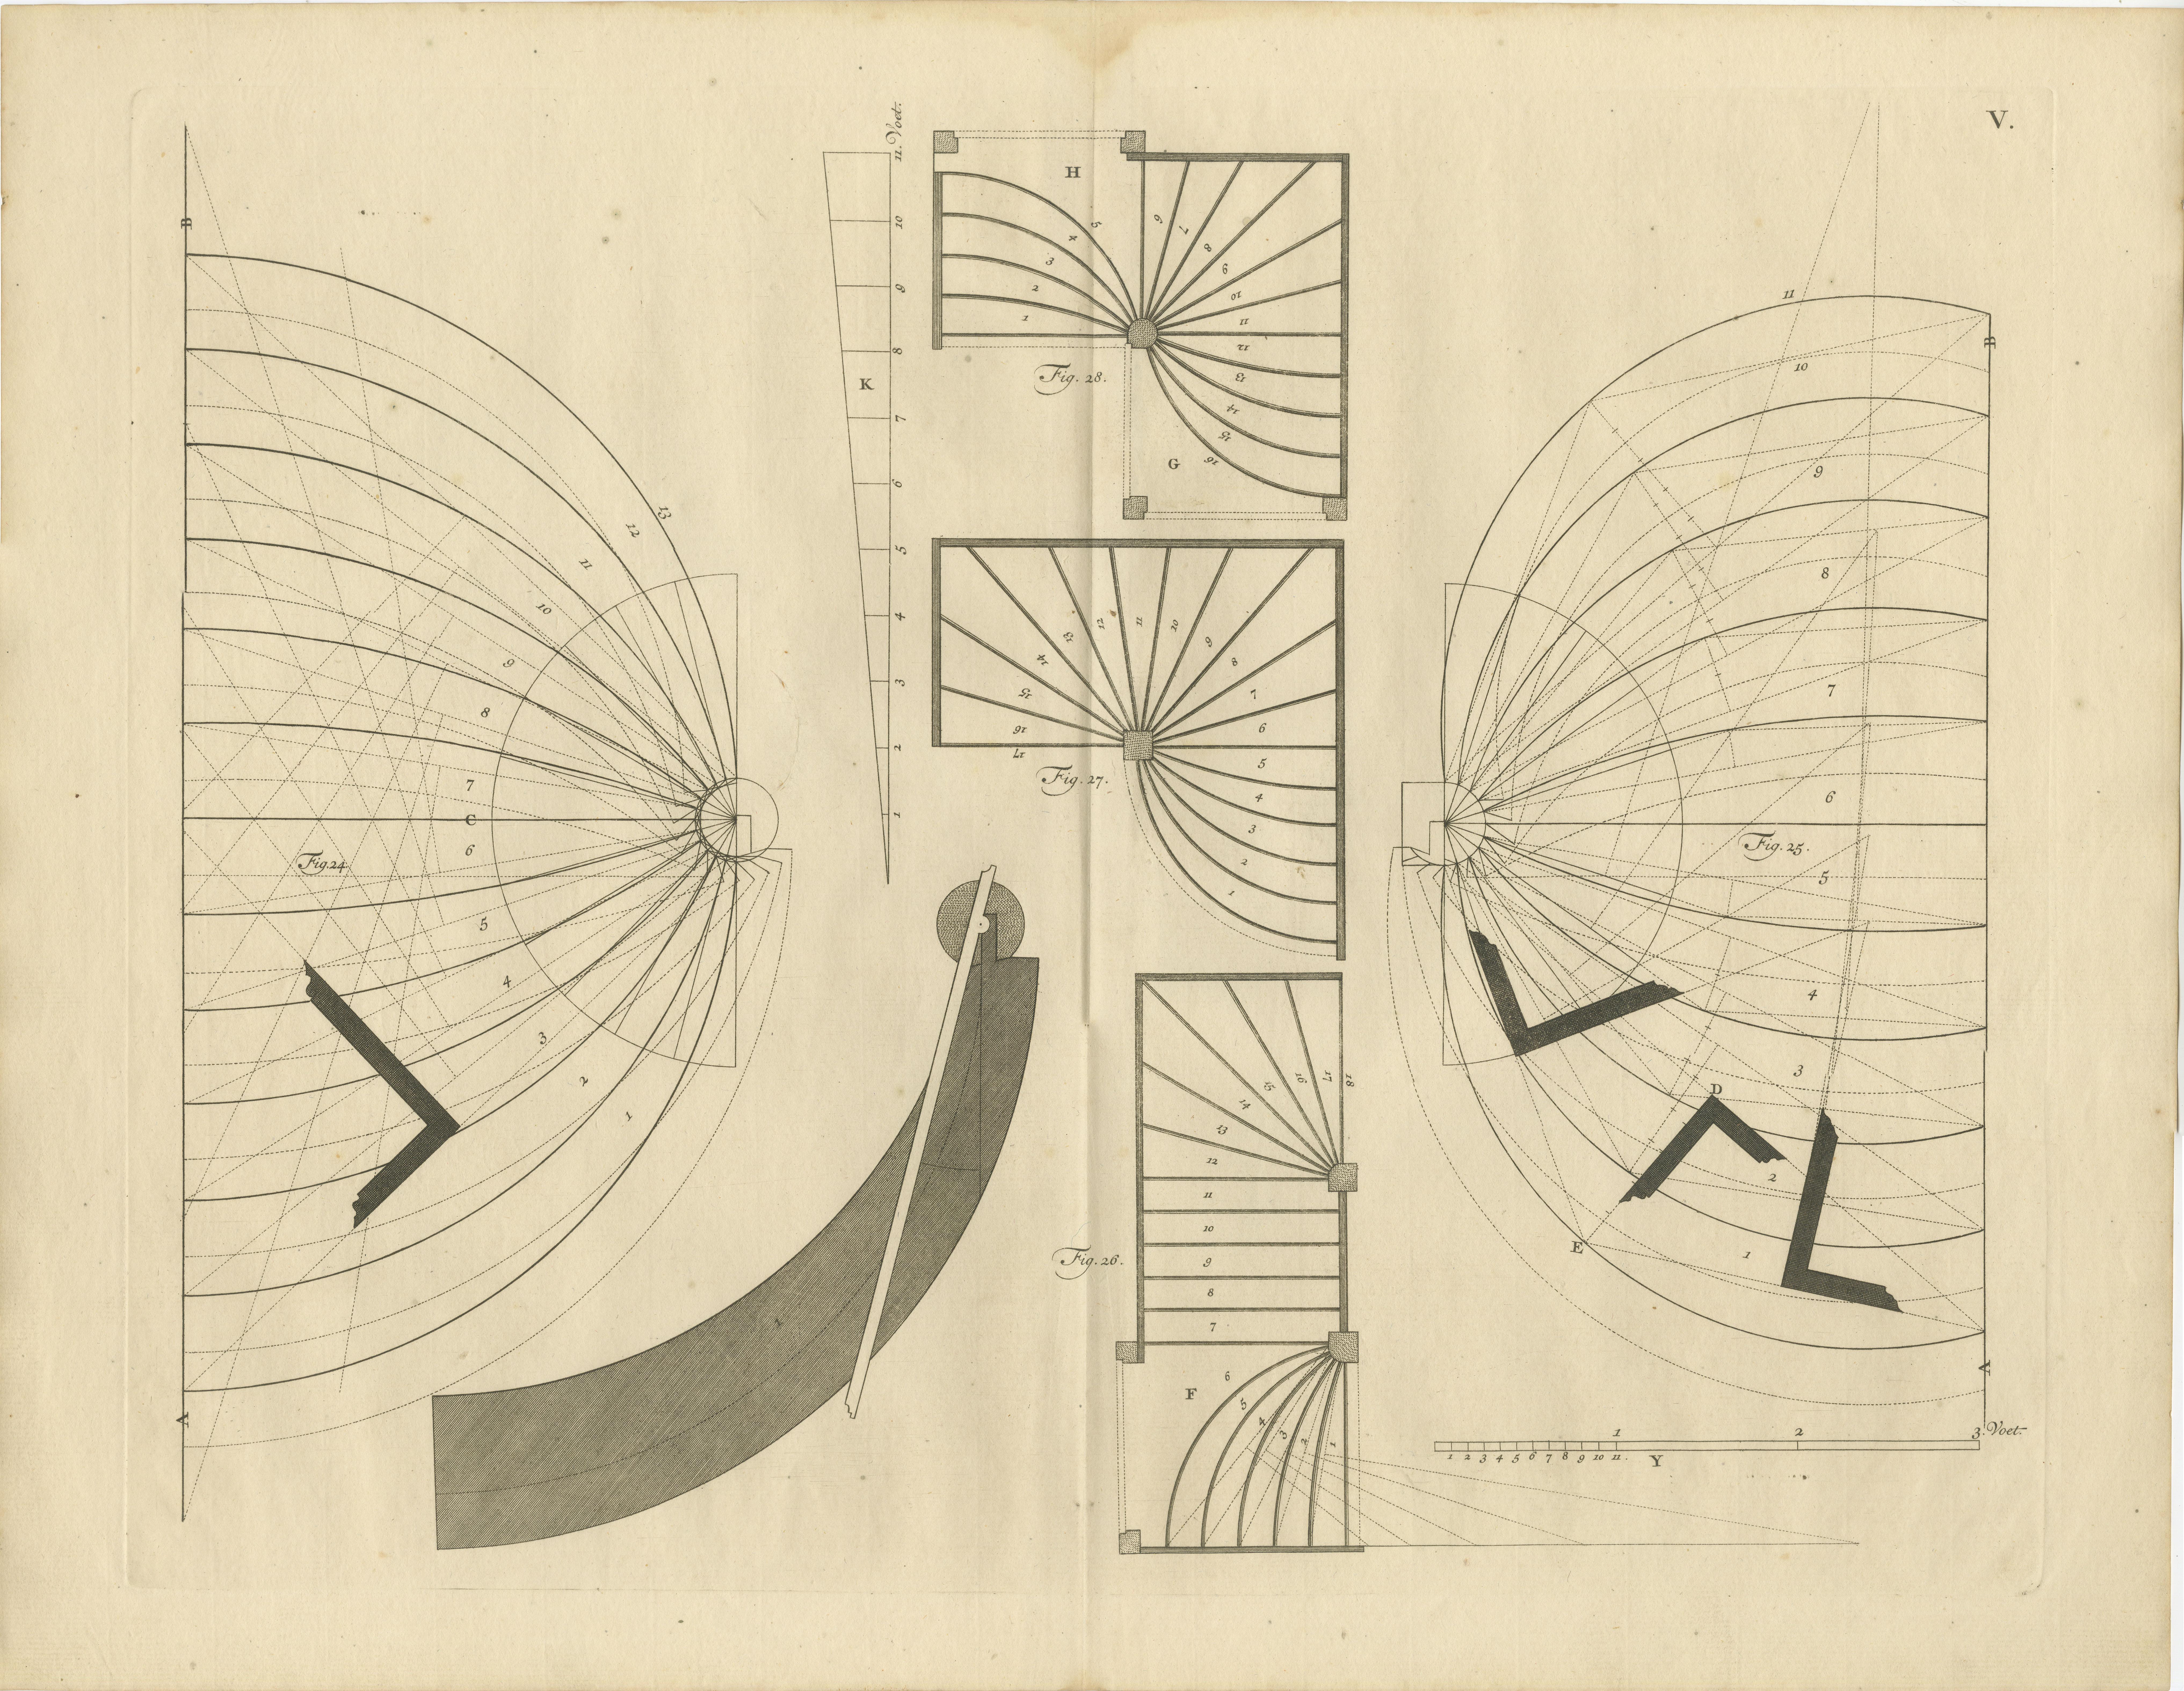 Paper 1739 Masterwork: Van der Horst's Architectural Elegance in Original Engravings For Sale